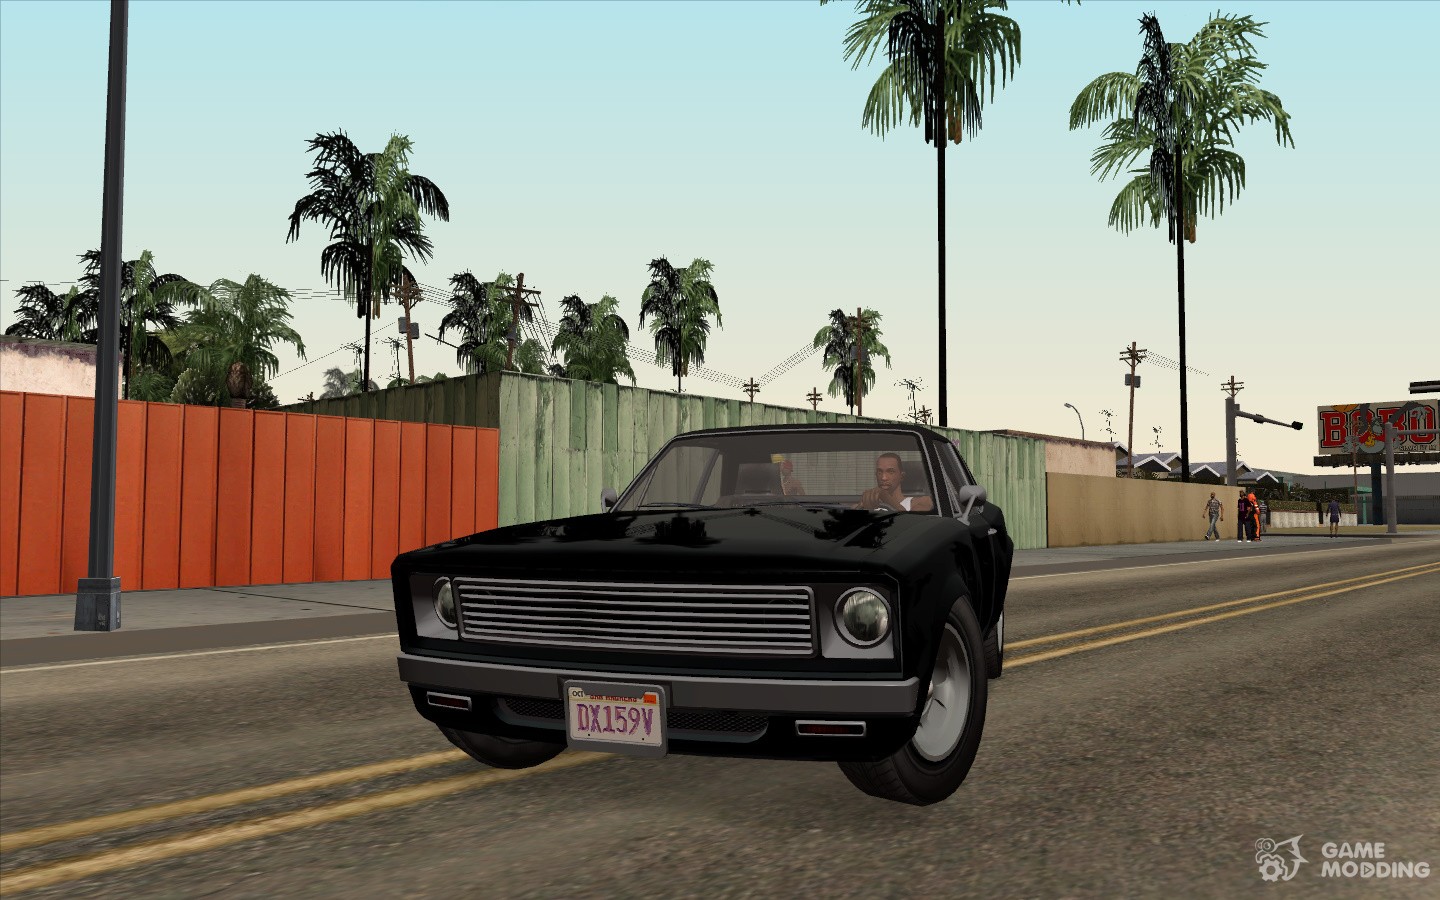 Gta collection. GTA sa car reflection Mod. Отражения для ГТА са. GTA San Andreas отражения на авто. Reflections для GTA sa.